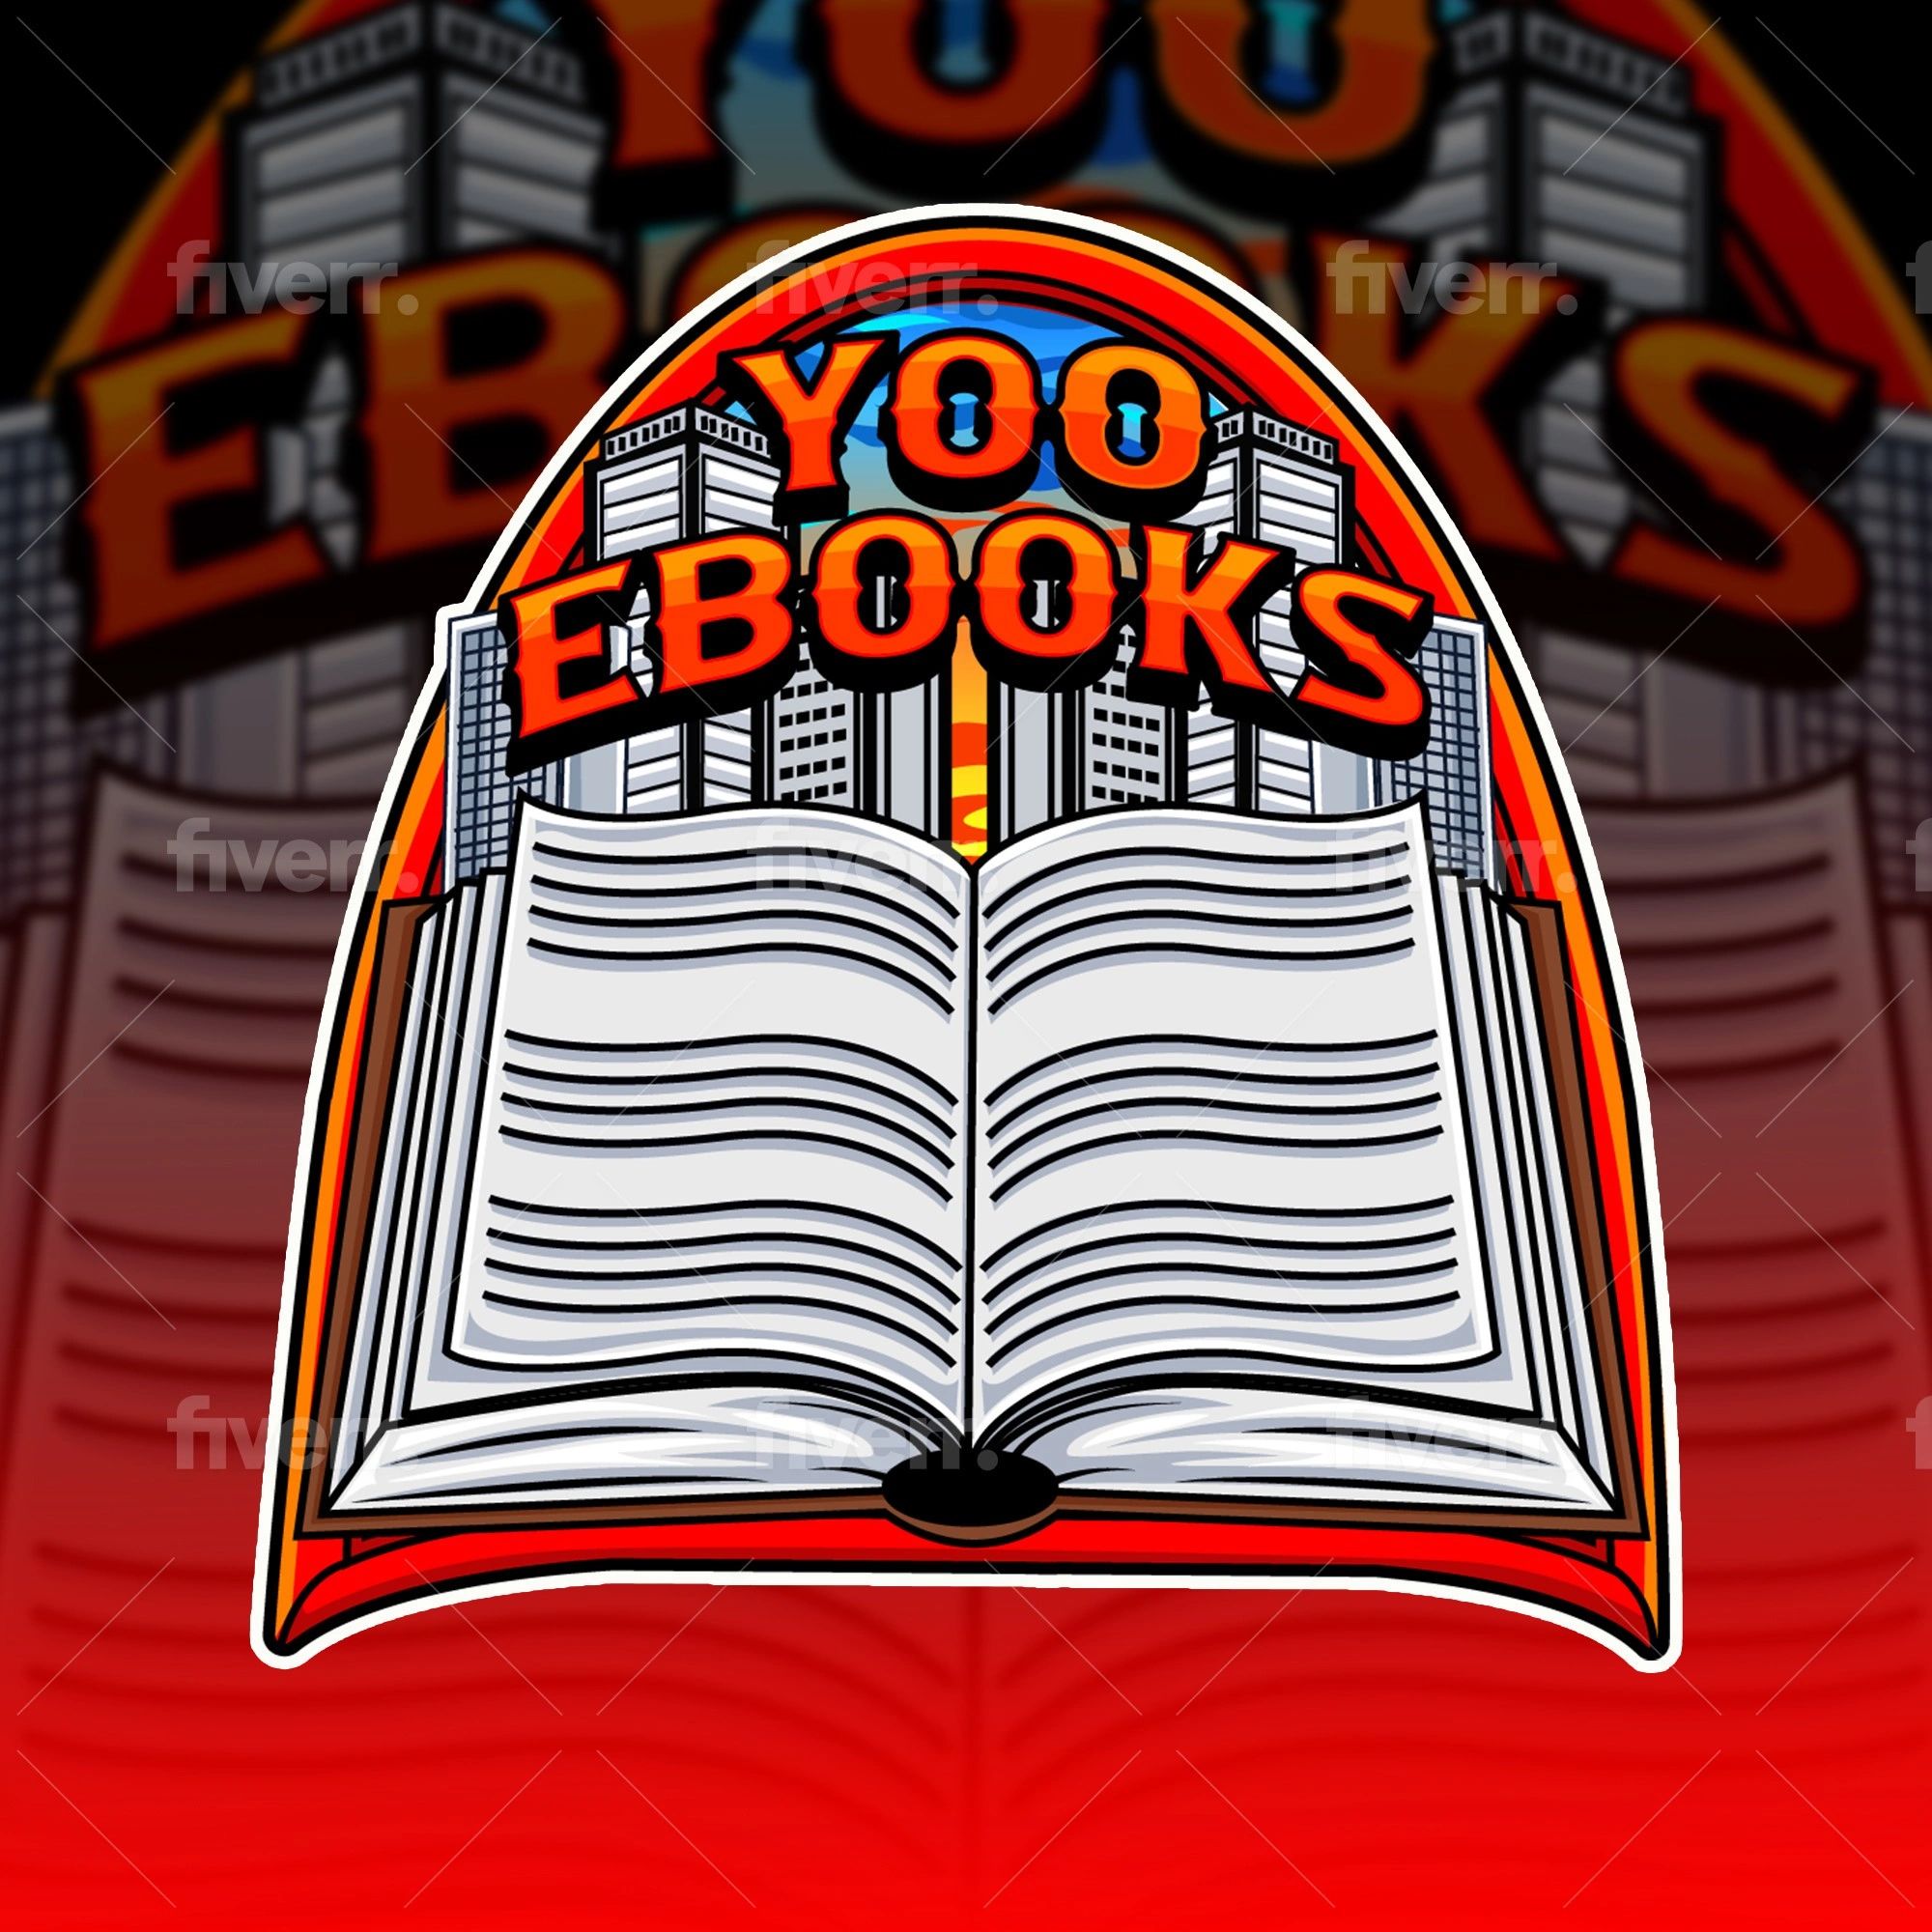 Ebooks - Yo Ebooks!